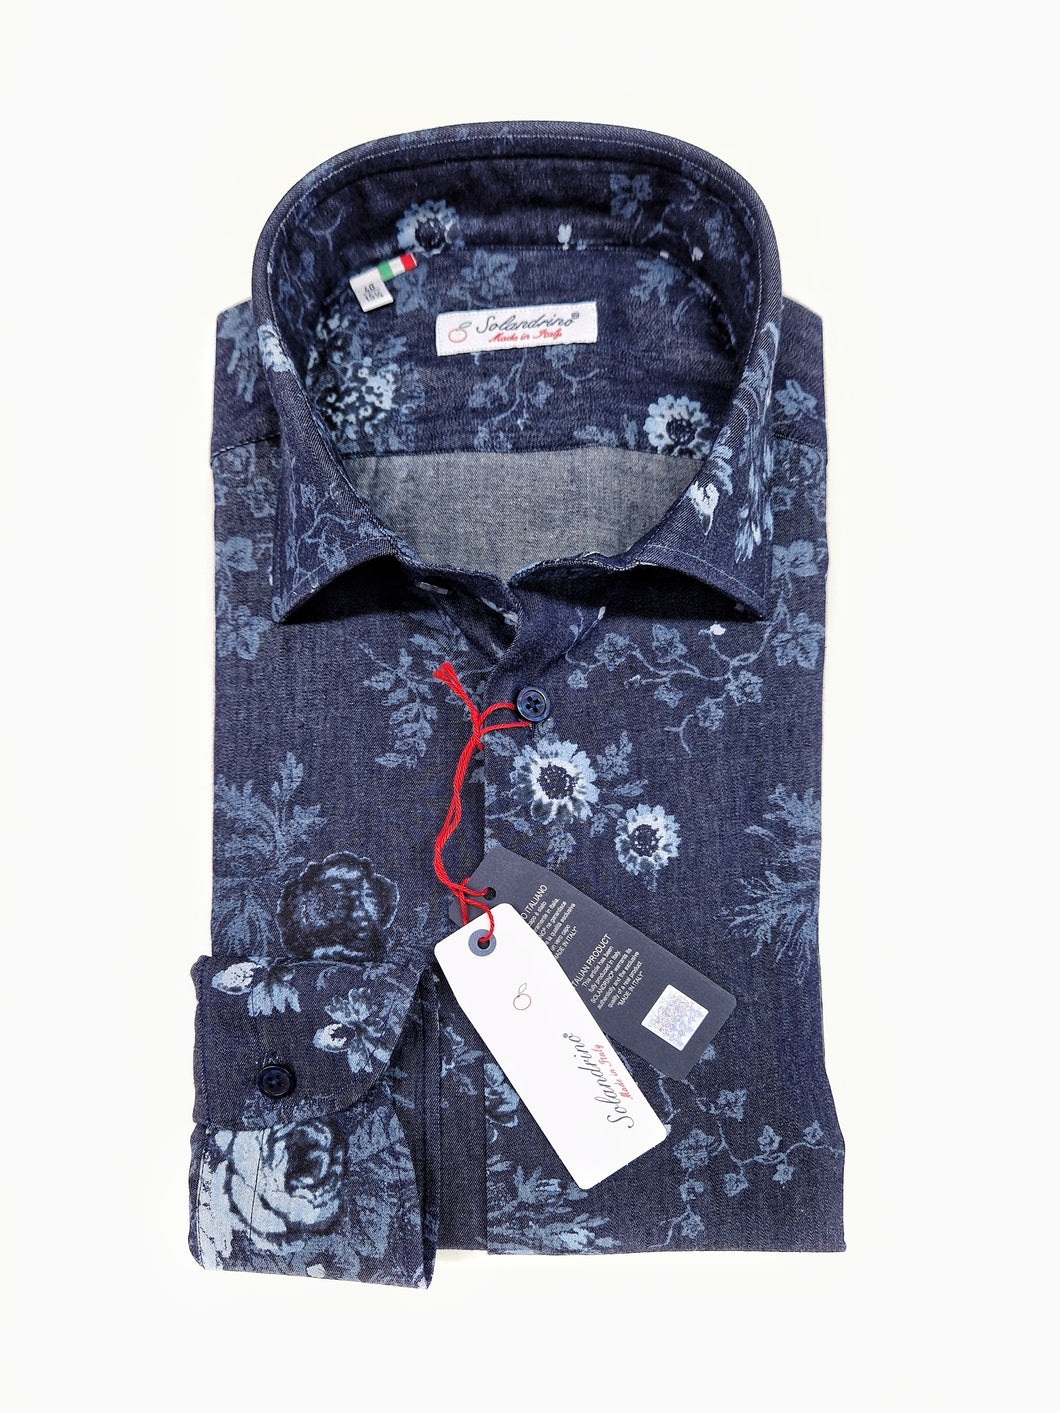 Camicia uomo DENIM blu FANTASIA FASHION  puro cotone made in Italy Blue Navy shirt